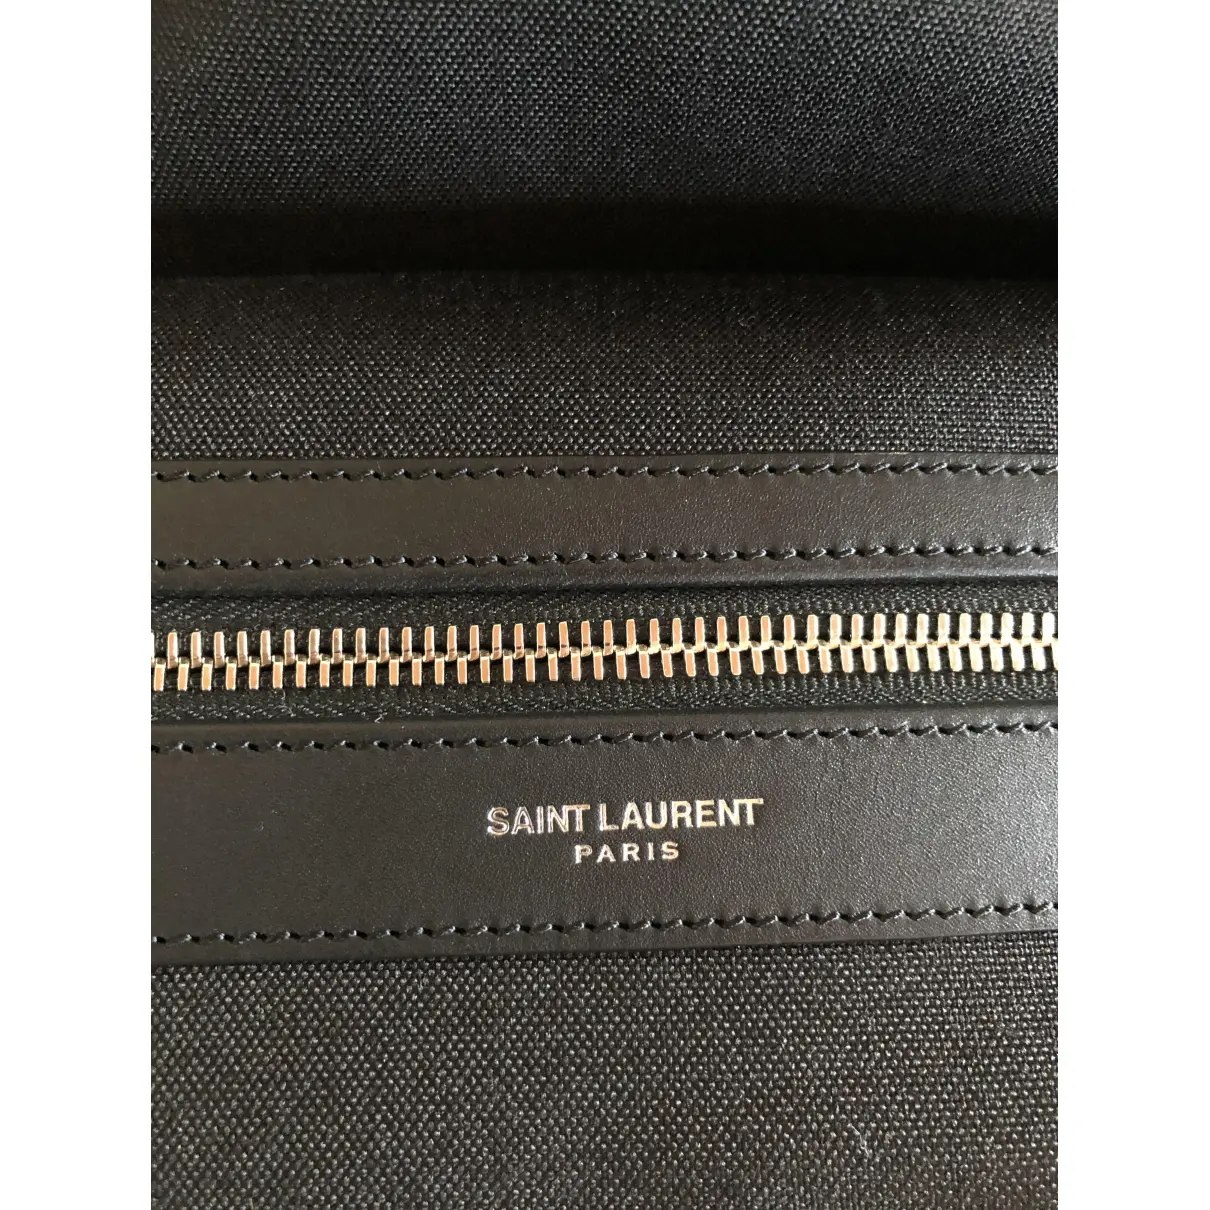 Luxury Saint Laurent Bags Men